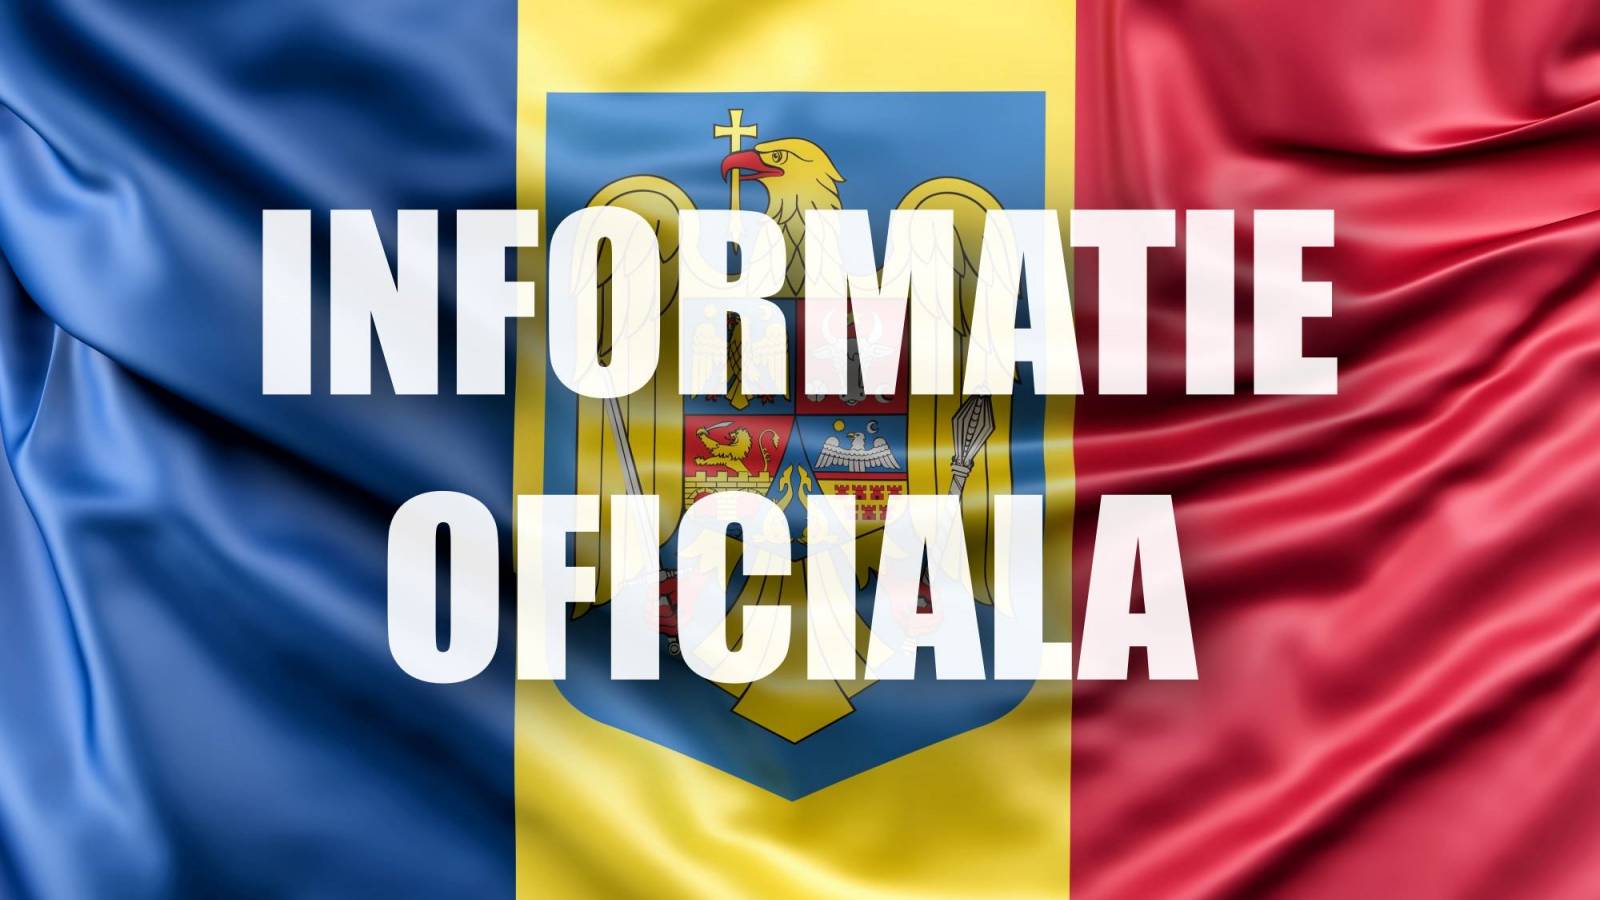 Ministerul Apararii 3 Anuturi INTERES National Armata Romana Ucraina NATO